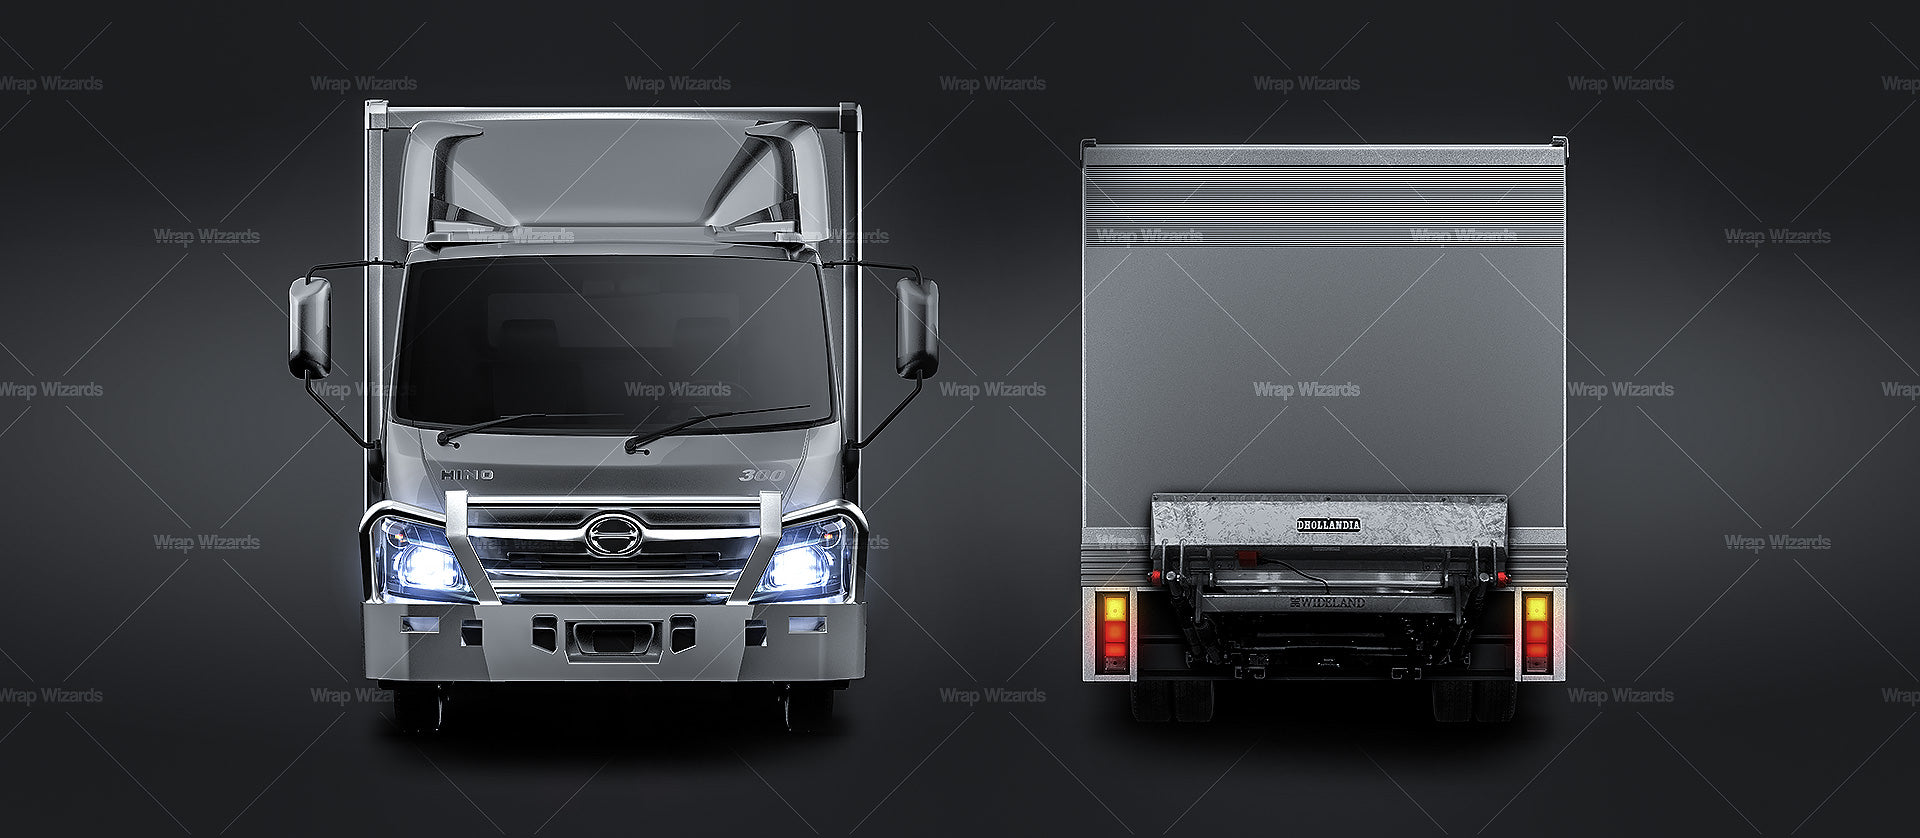 Hino 300 custom box truck with tail lift - Truck Mockup